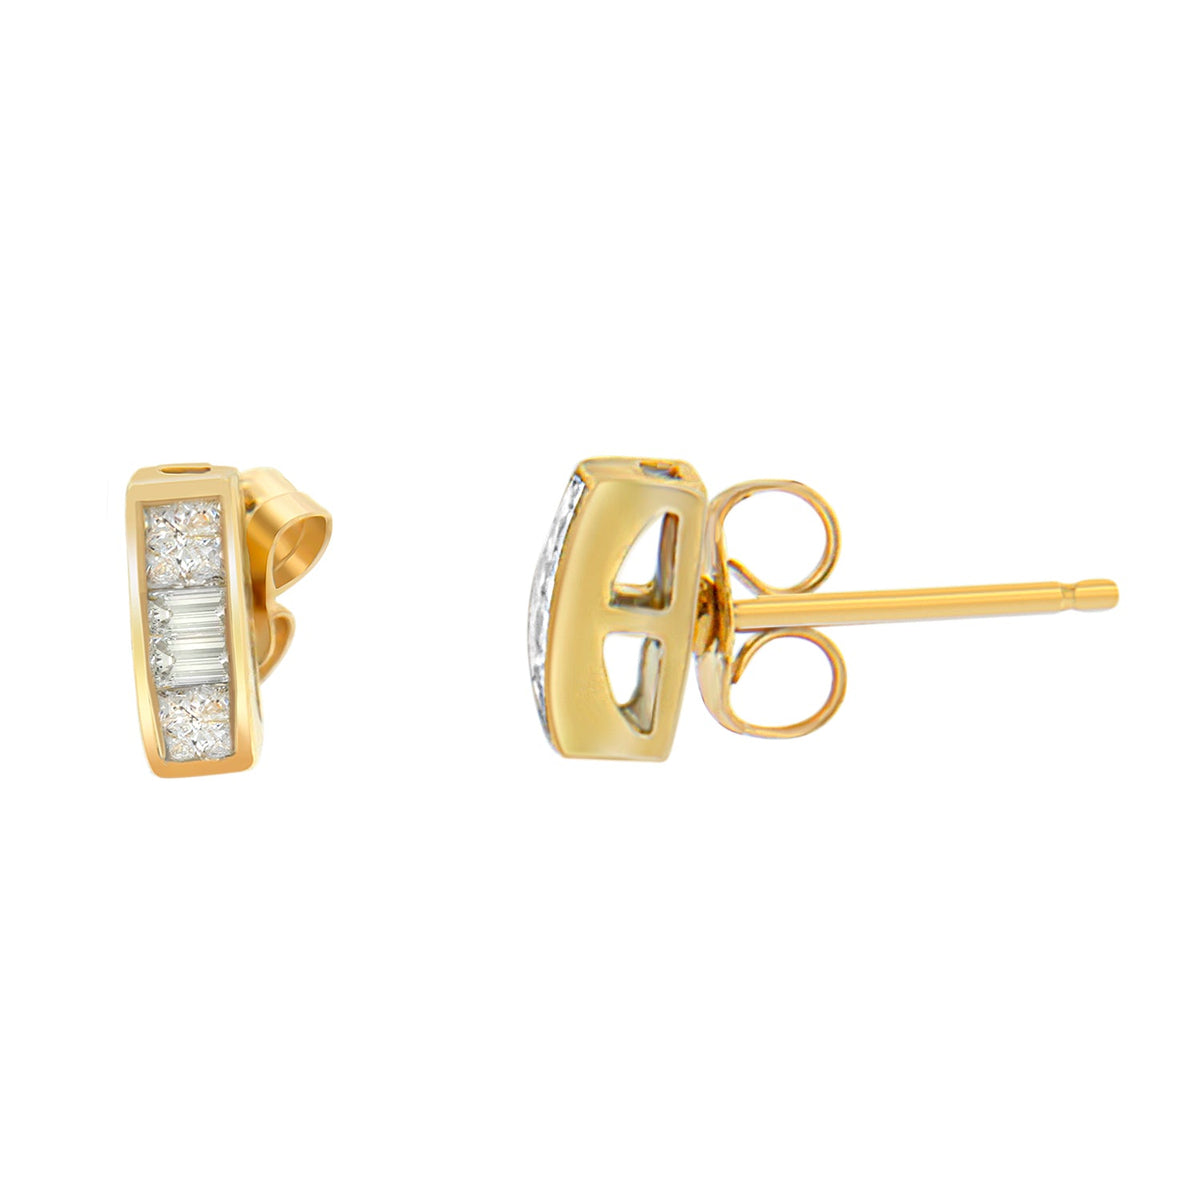 14k Yellow Gold 1/4ct TDW Diamond Earrings (H-I, SI1-SI2) - LinkagejewelrydesignLinkagejewelrydesign